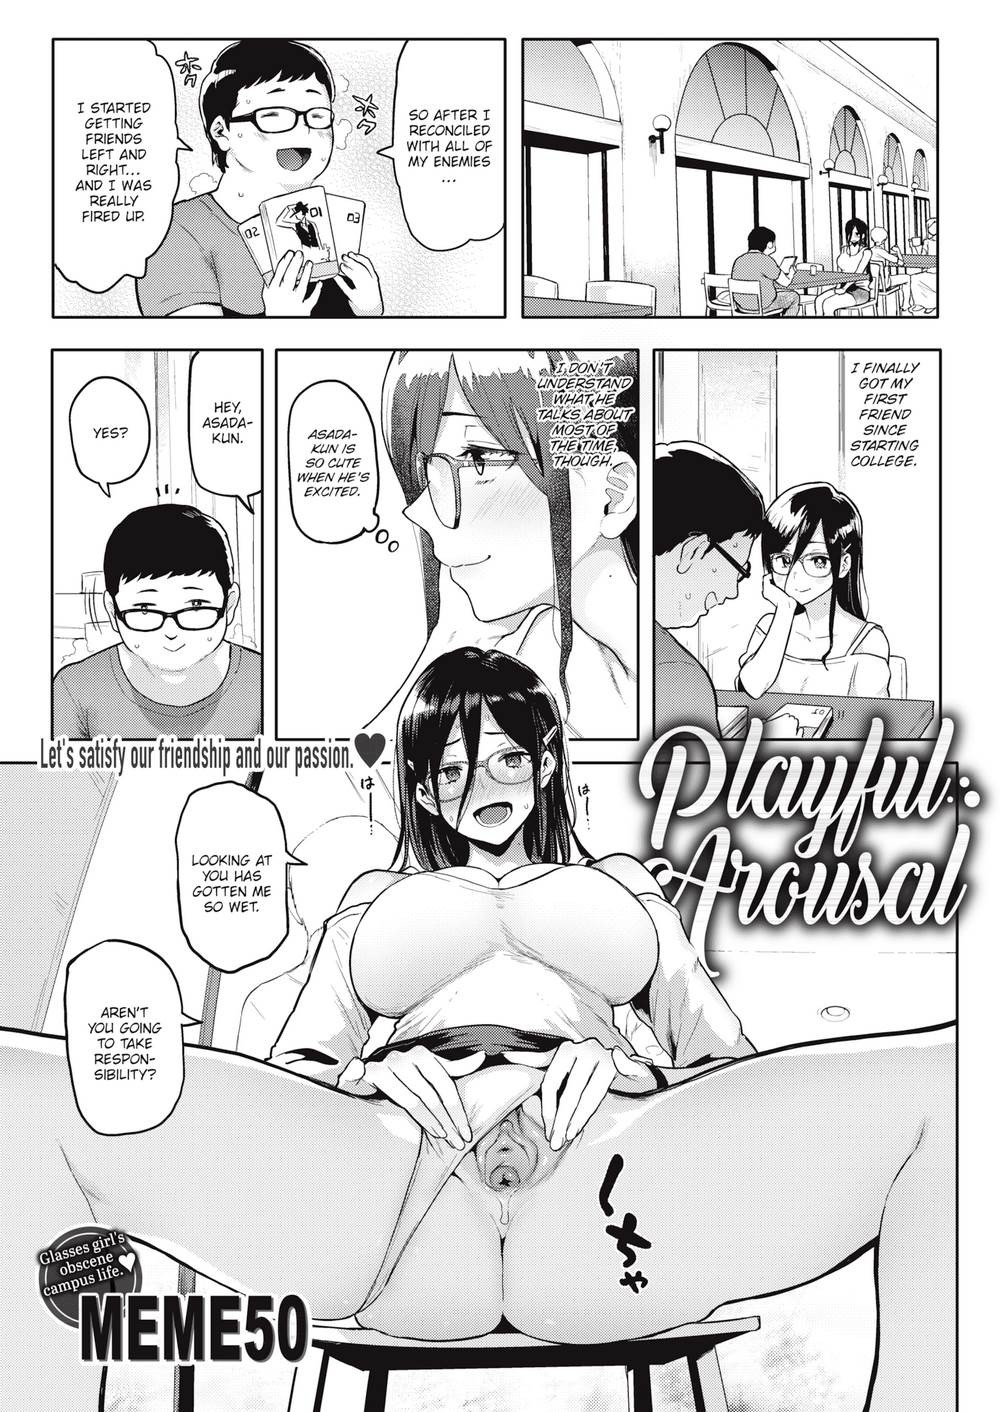 Playful Arousal - Pururin, Free Online Hentai Manga and Doujinshi Reader